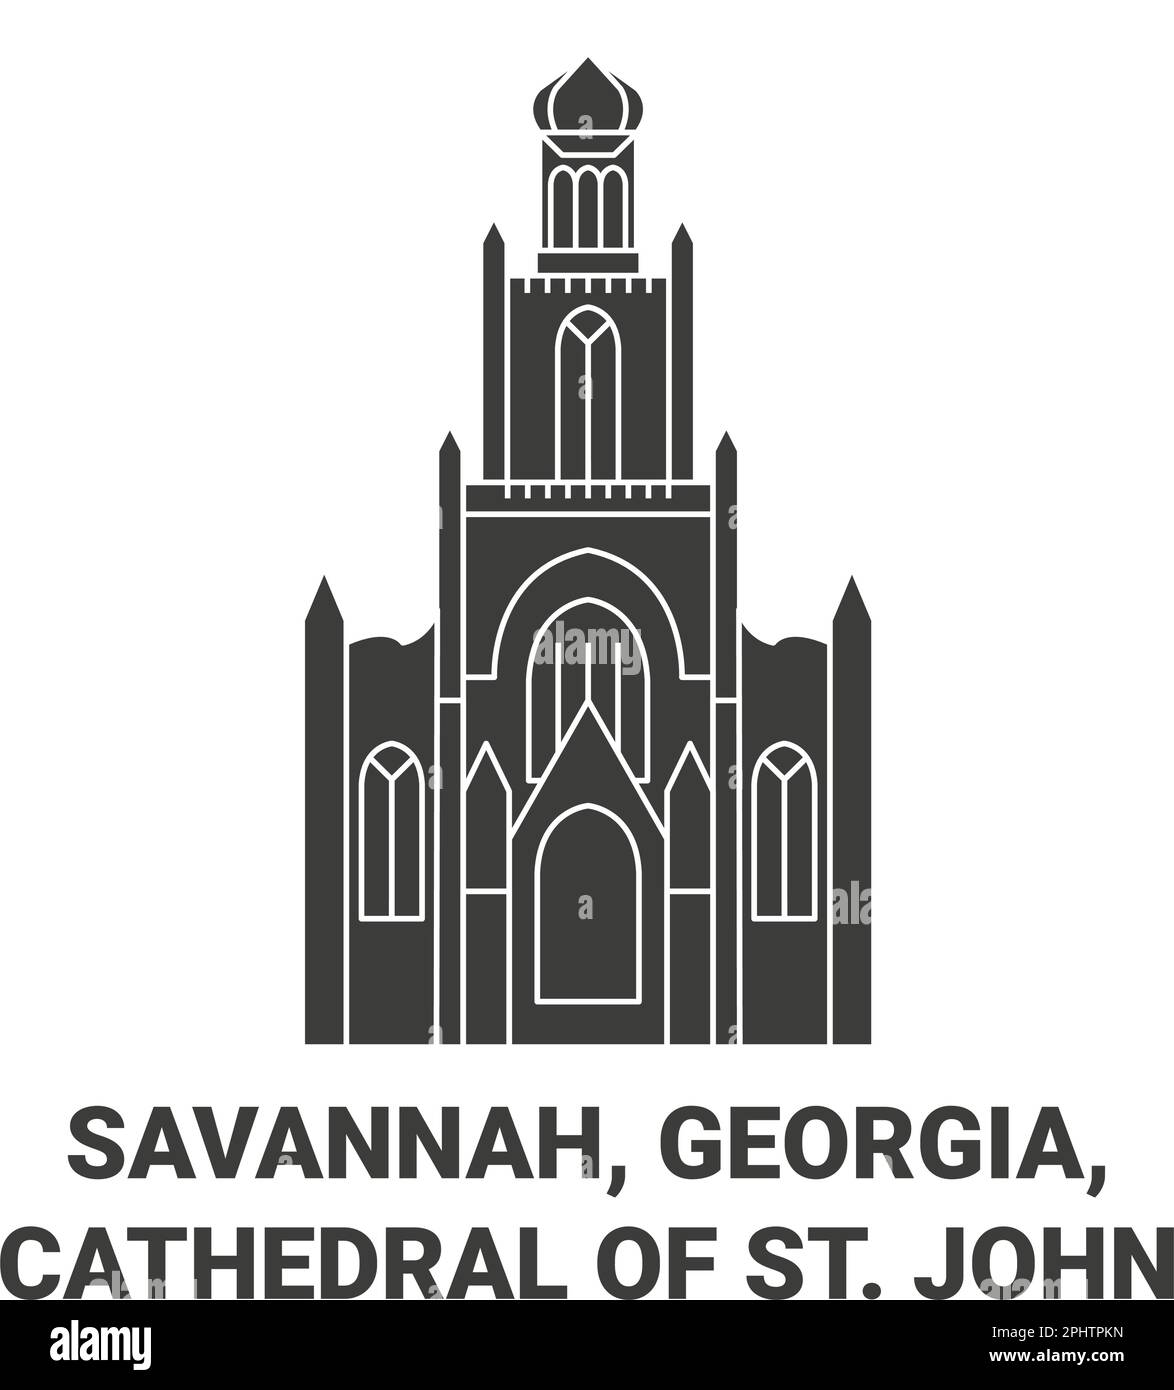 United States, Savannah, Georgia, Cathedral Of St. John travel landmark vector illustration Stock Vector